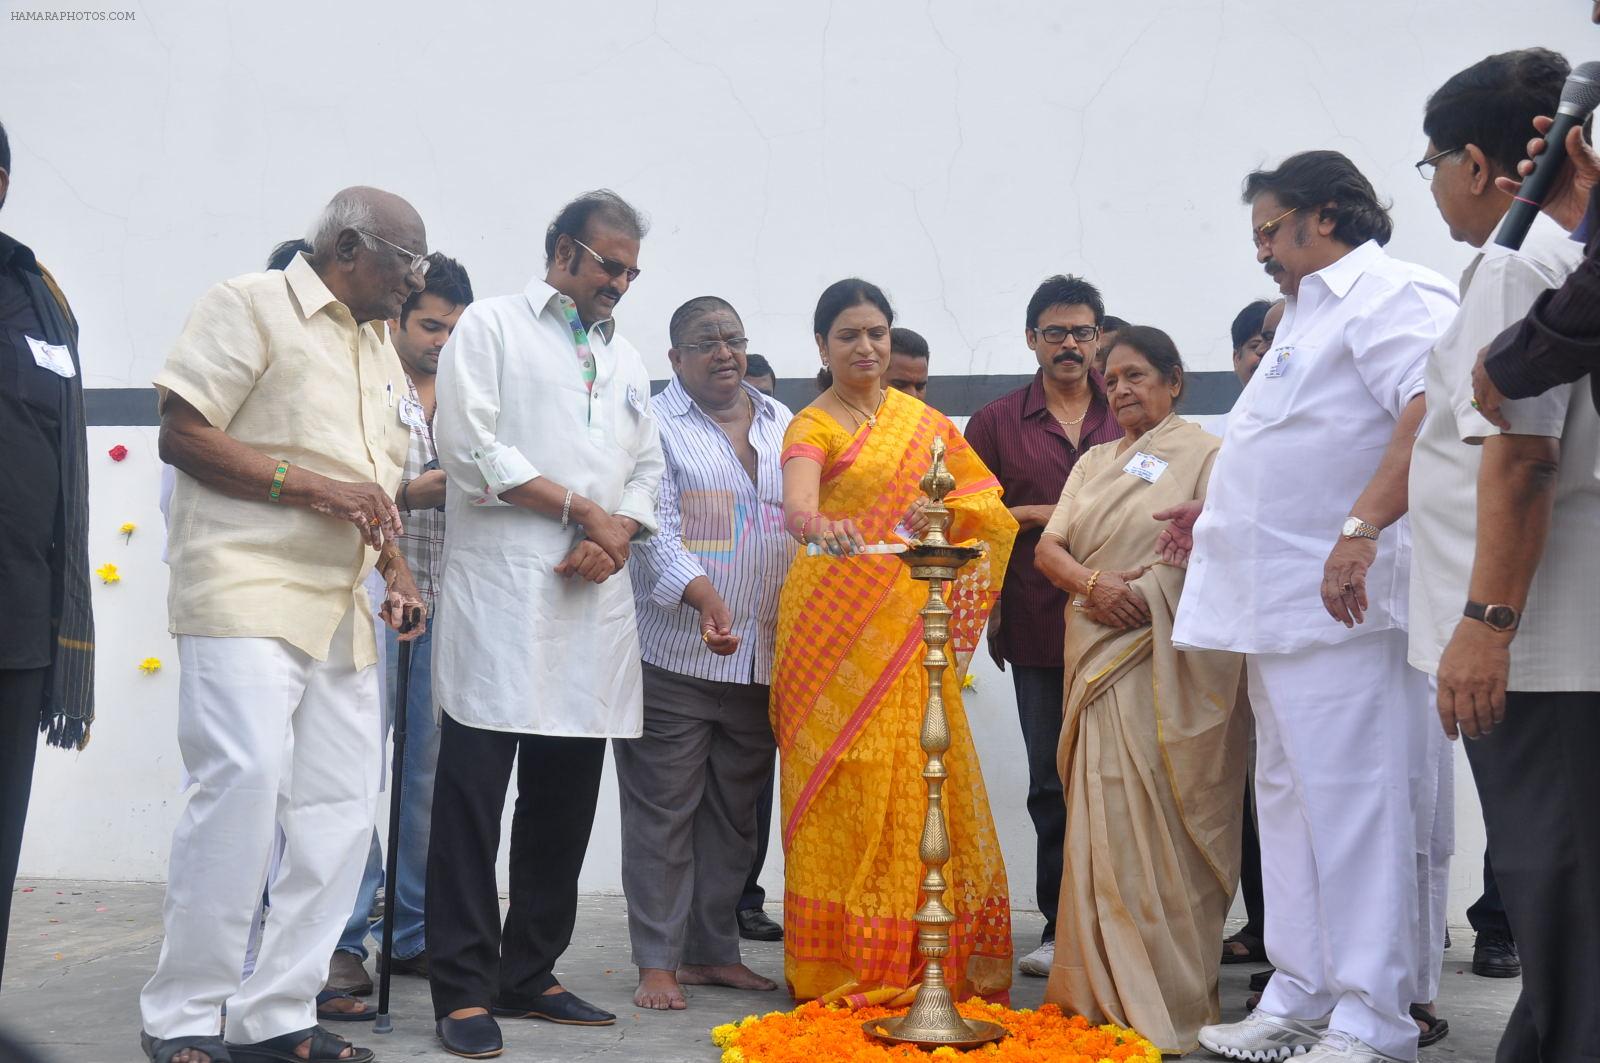 Telugu Film Industry Celebrates 80 years on 14th September 2011